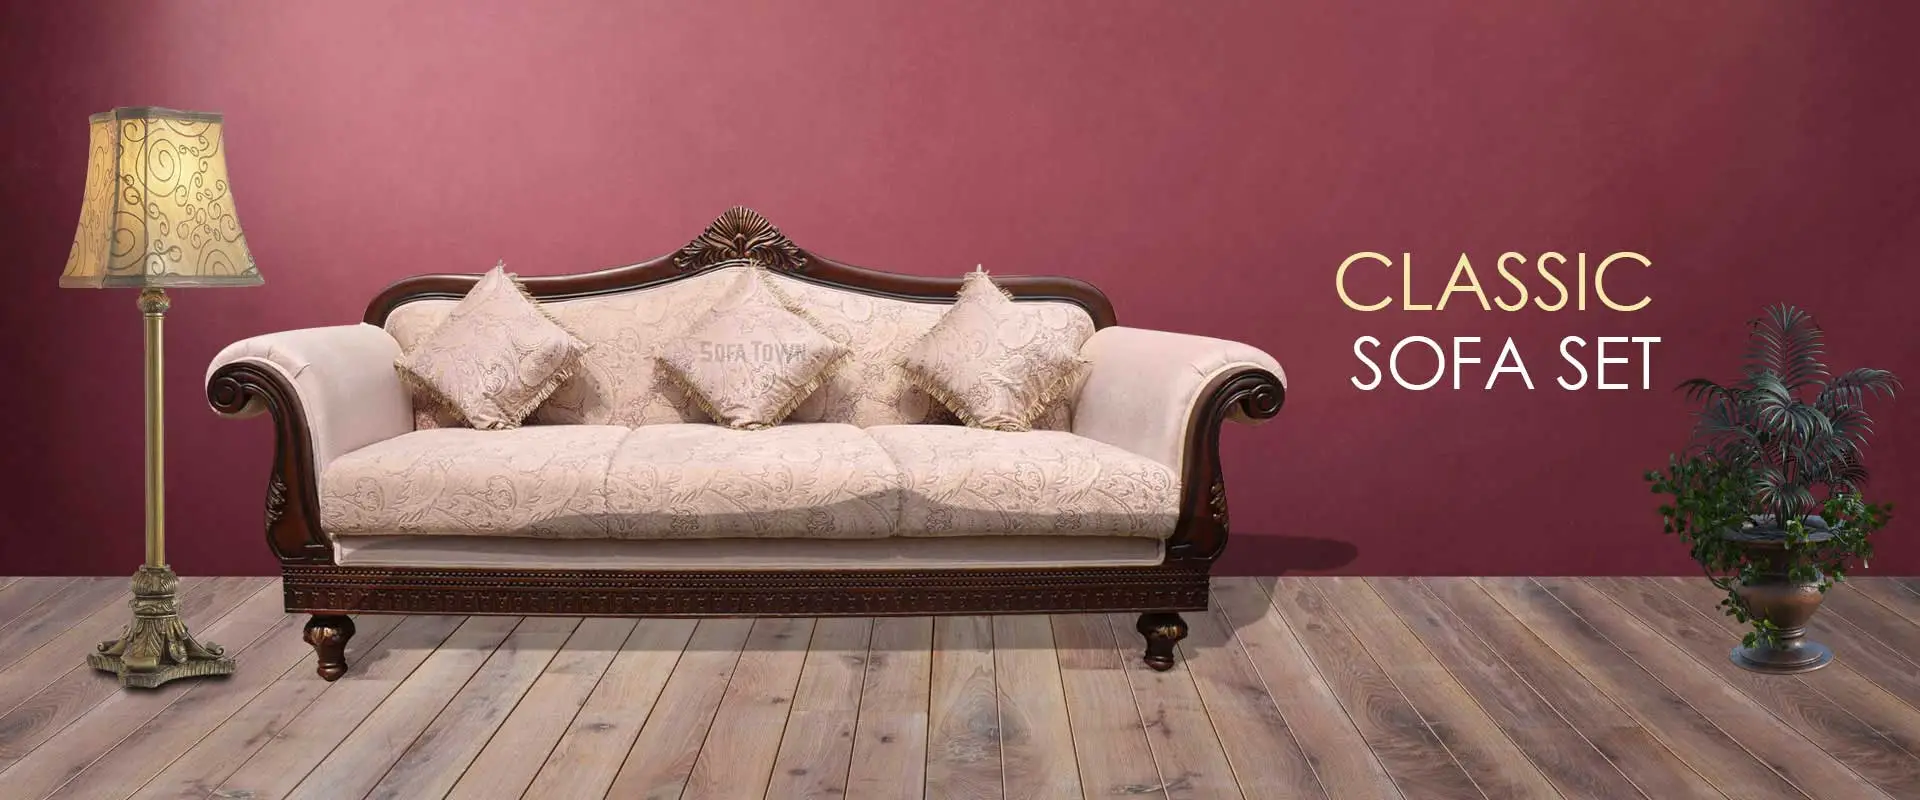 Classic Sofa Set  Manufacturers in Jammu And Kashmir